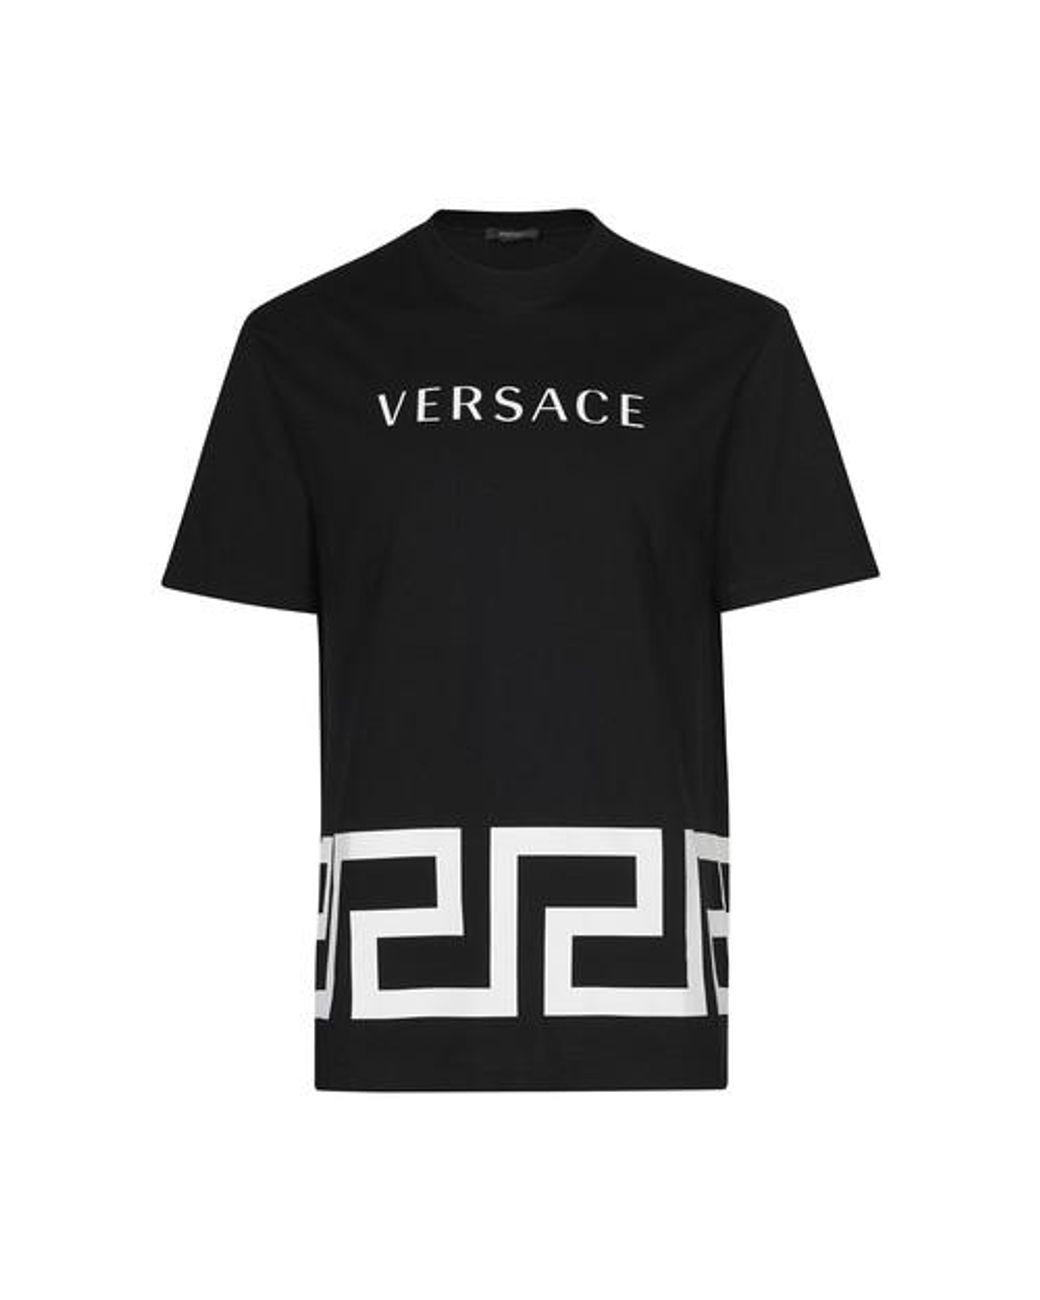 Versace Mitchel Fit T-shirt in Black for Men | Lyst